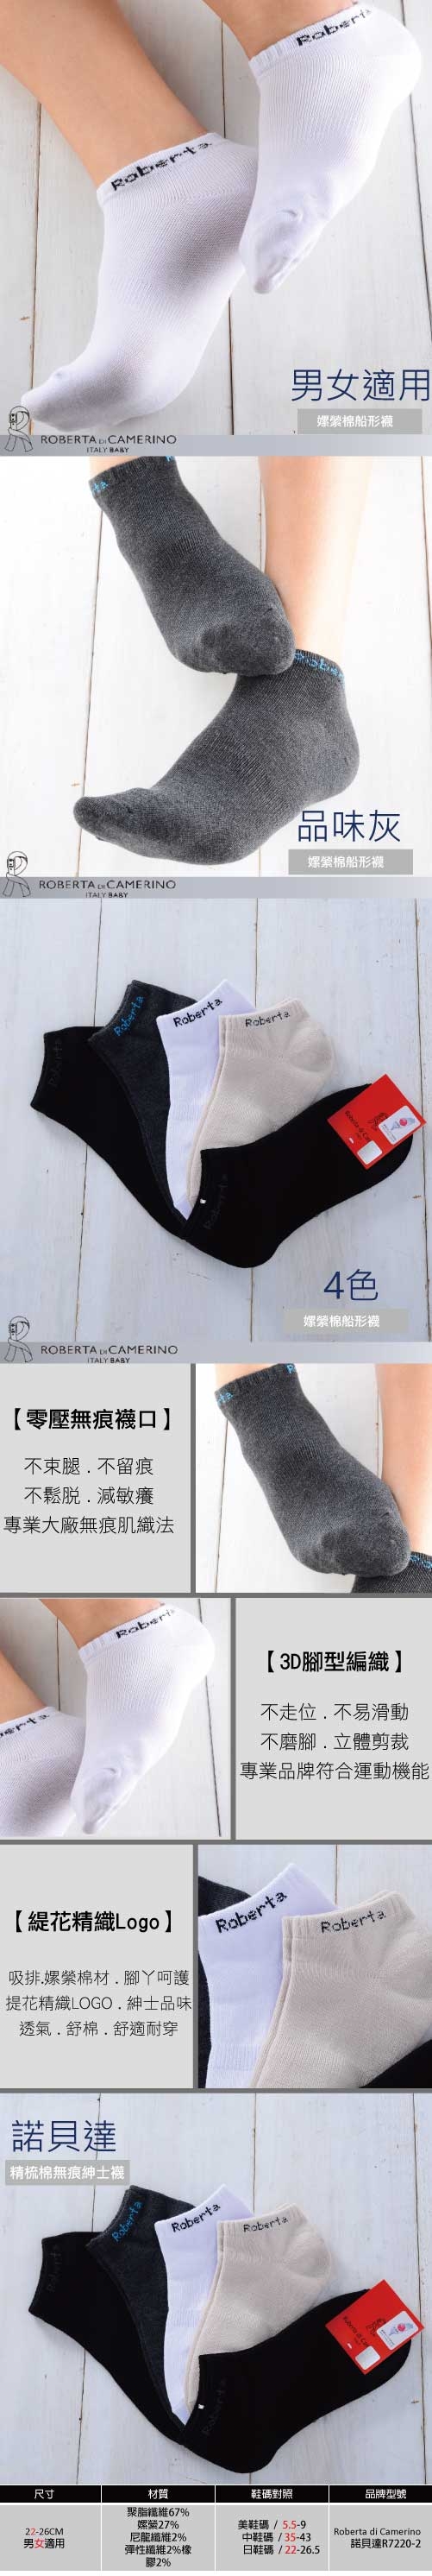 ROBERTA 諾貝達嫘縈棉船型襪男女適用7220-2-12雙入